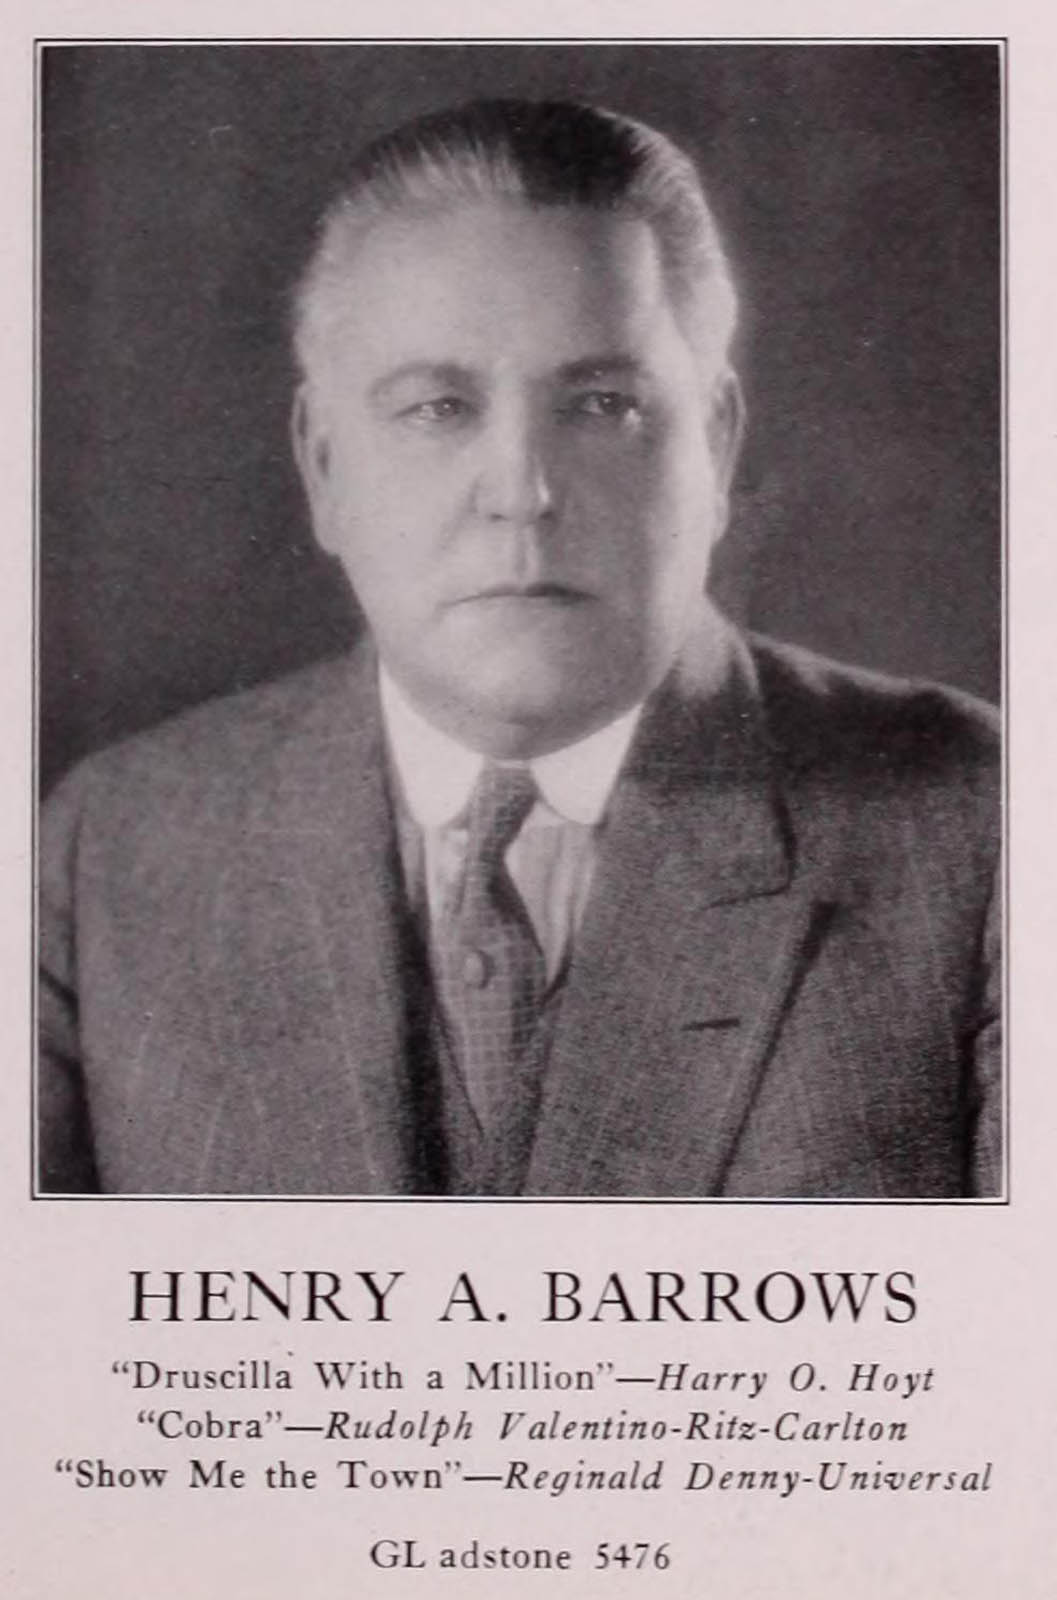 Henry Barrows